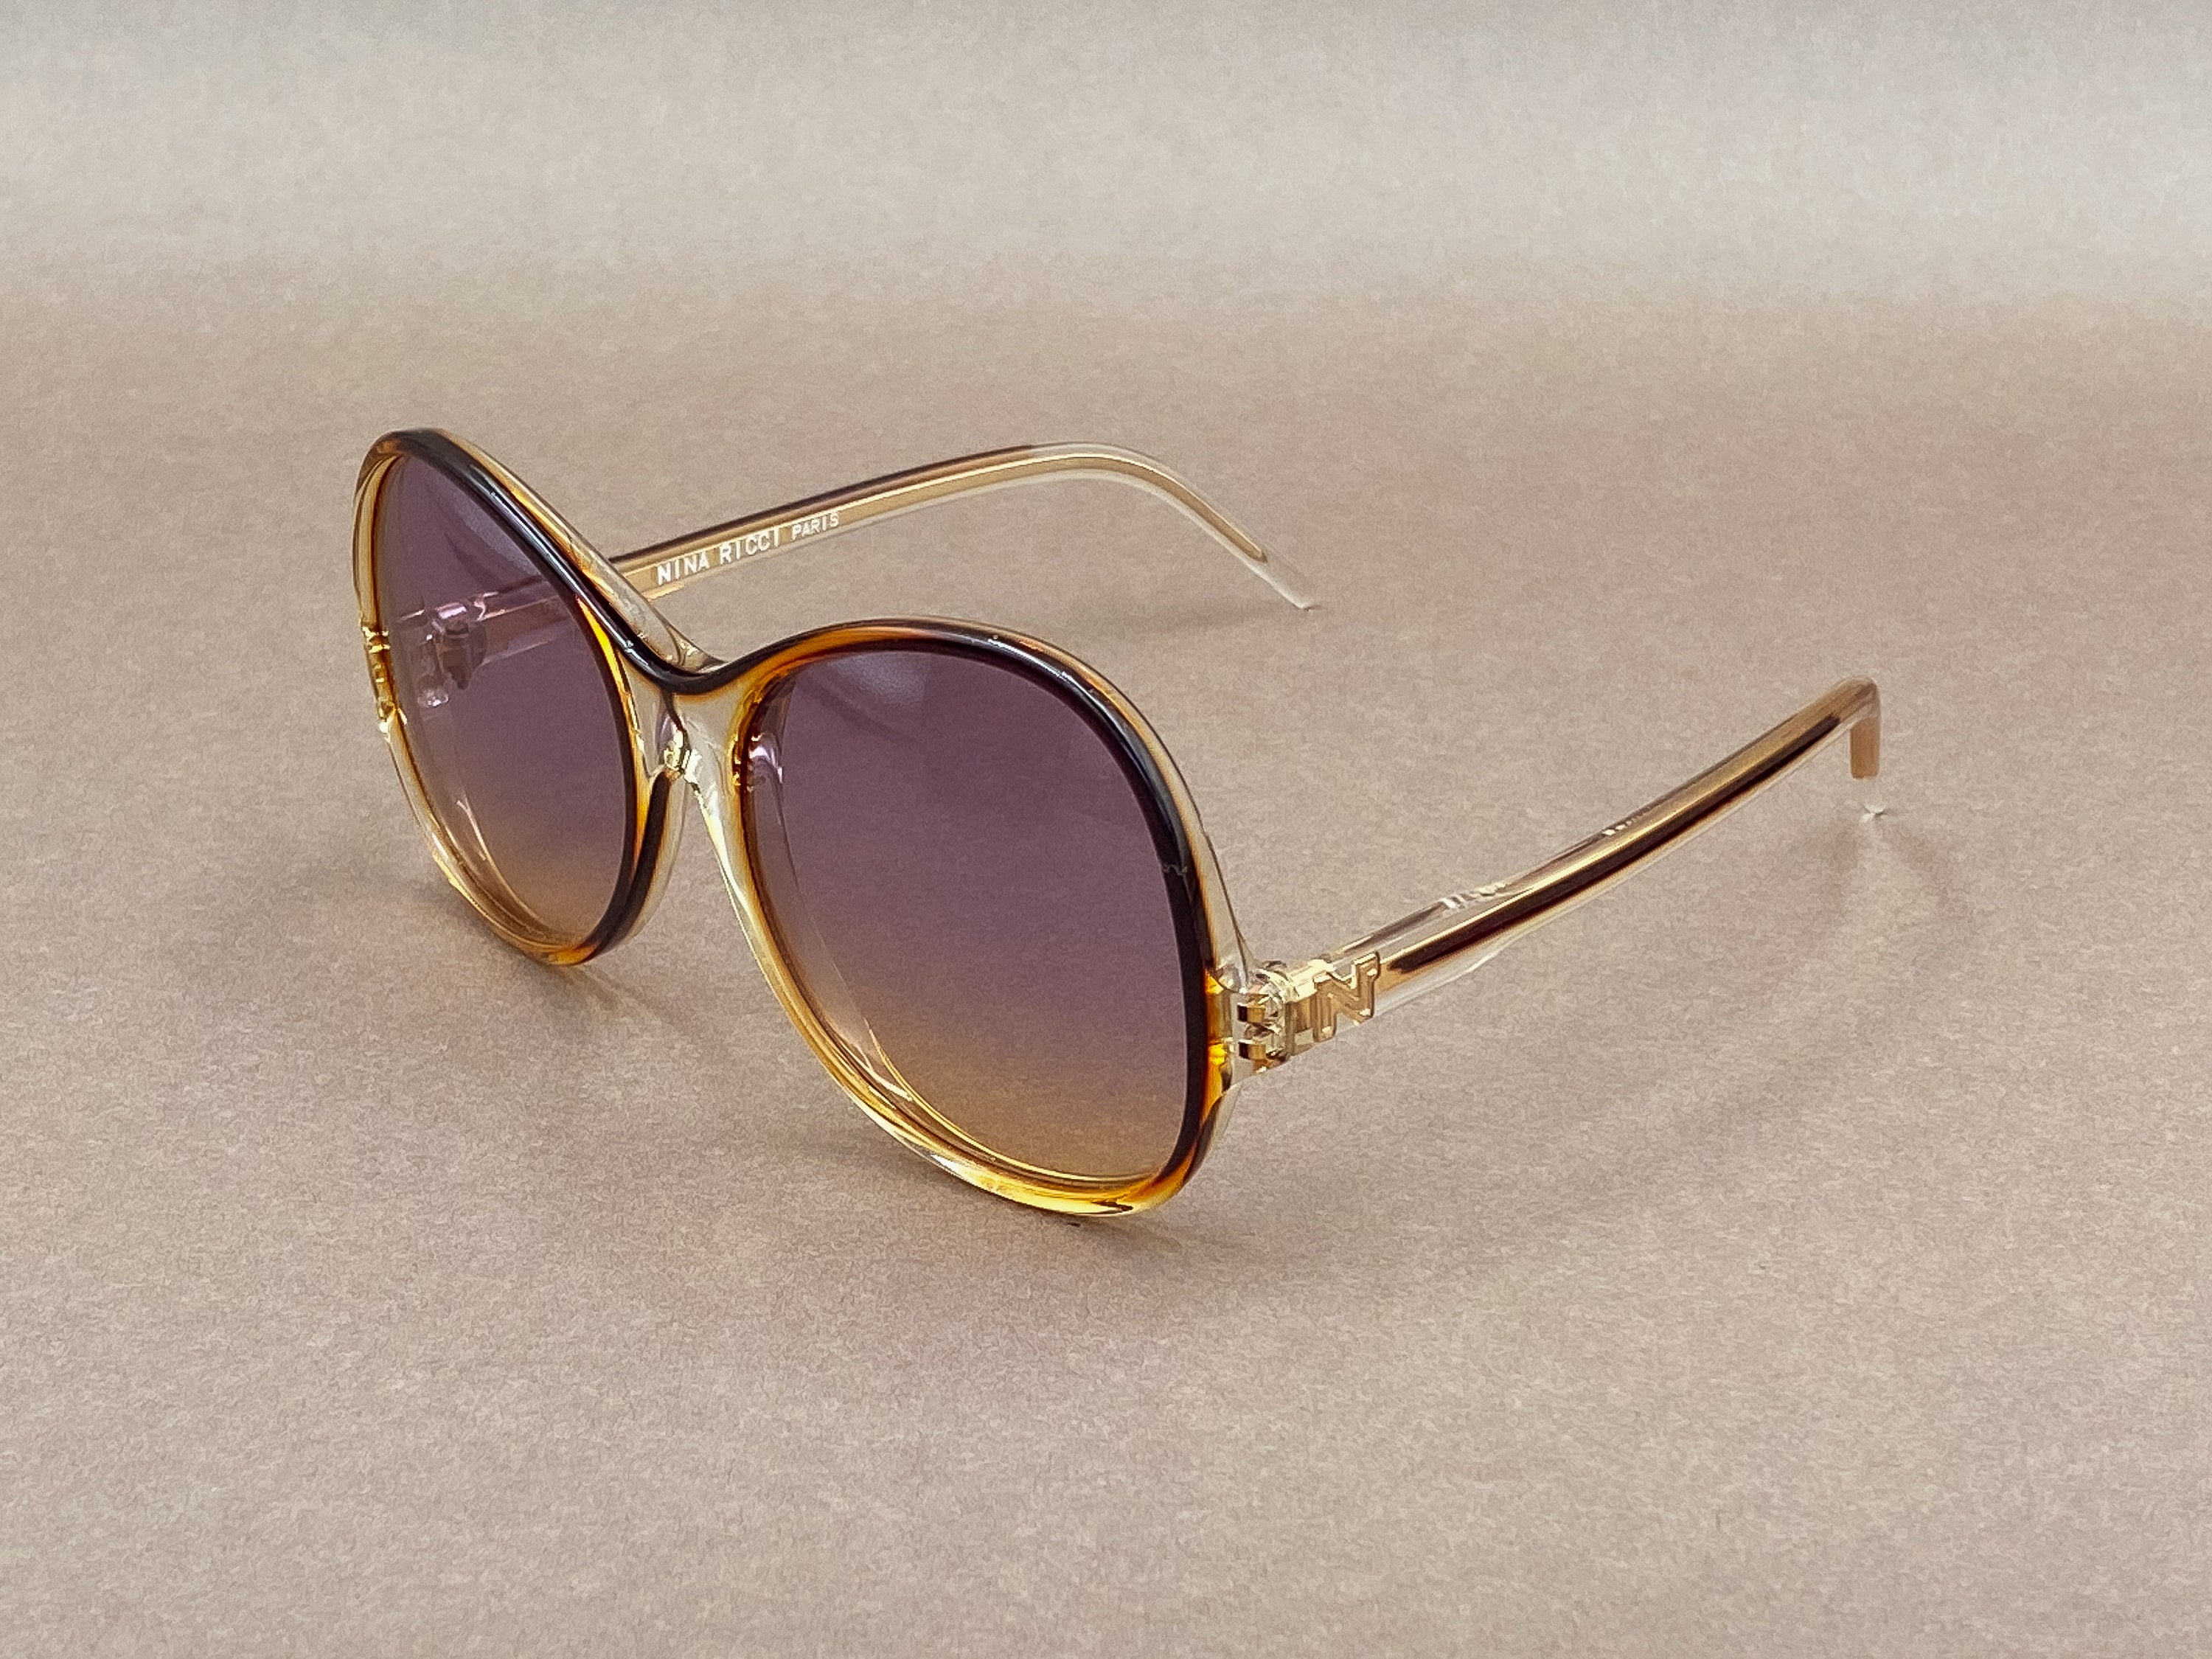 Nina Ricci 133-D16 ladies sunglasses